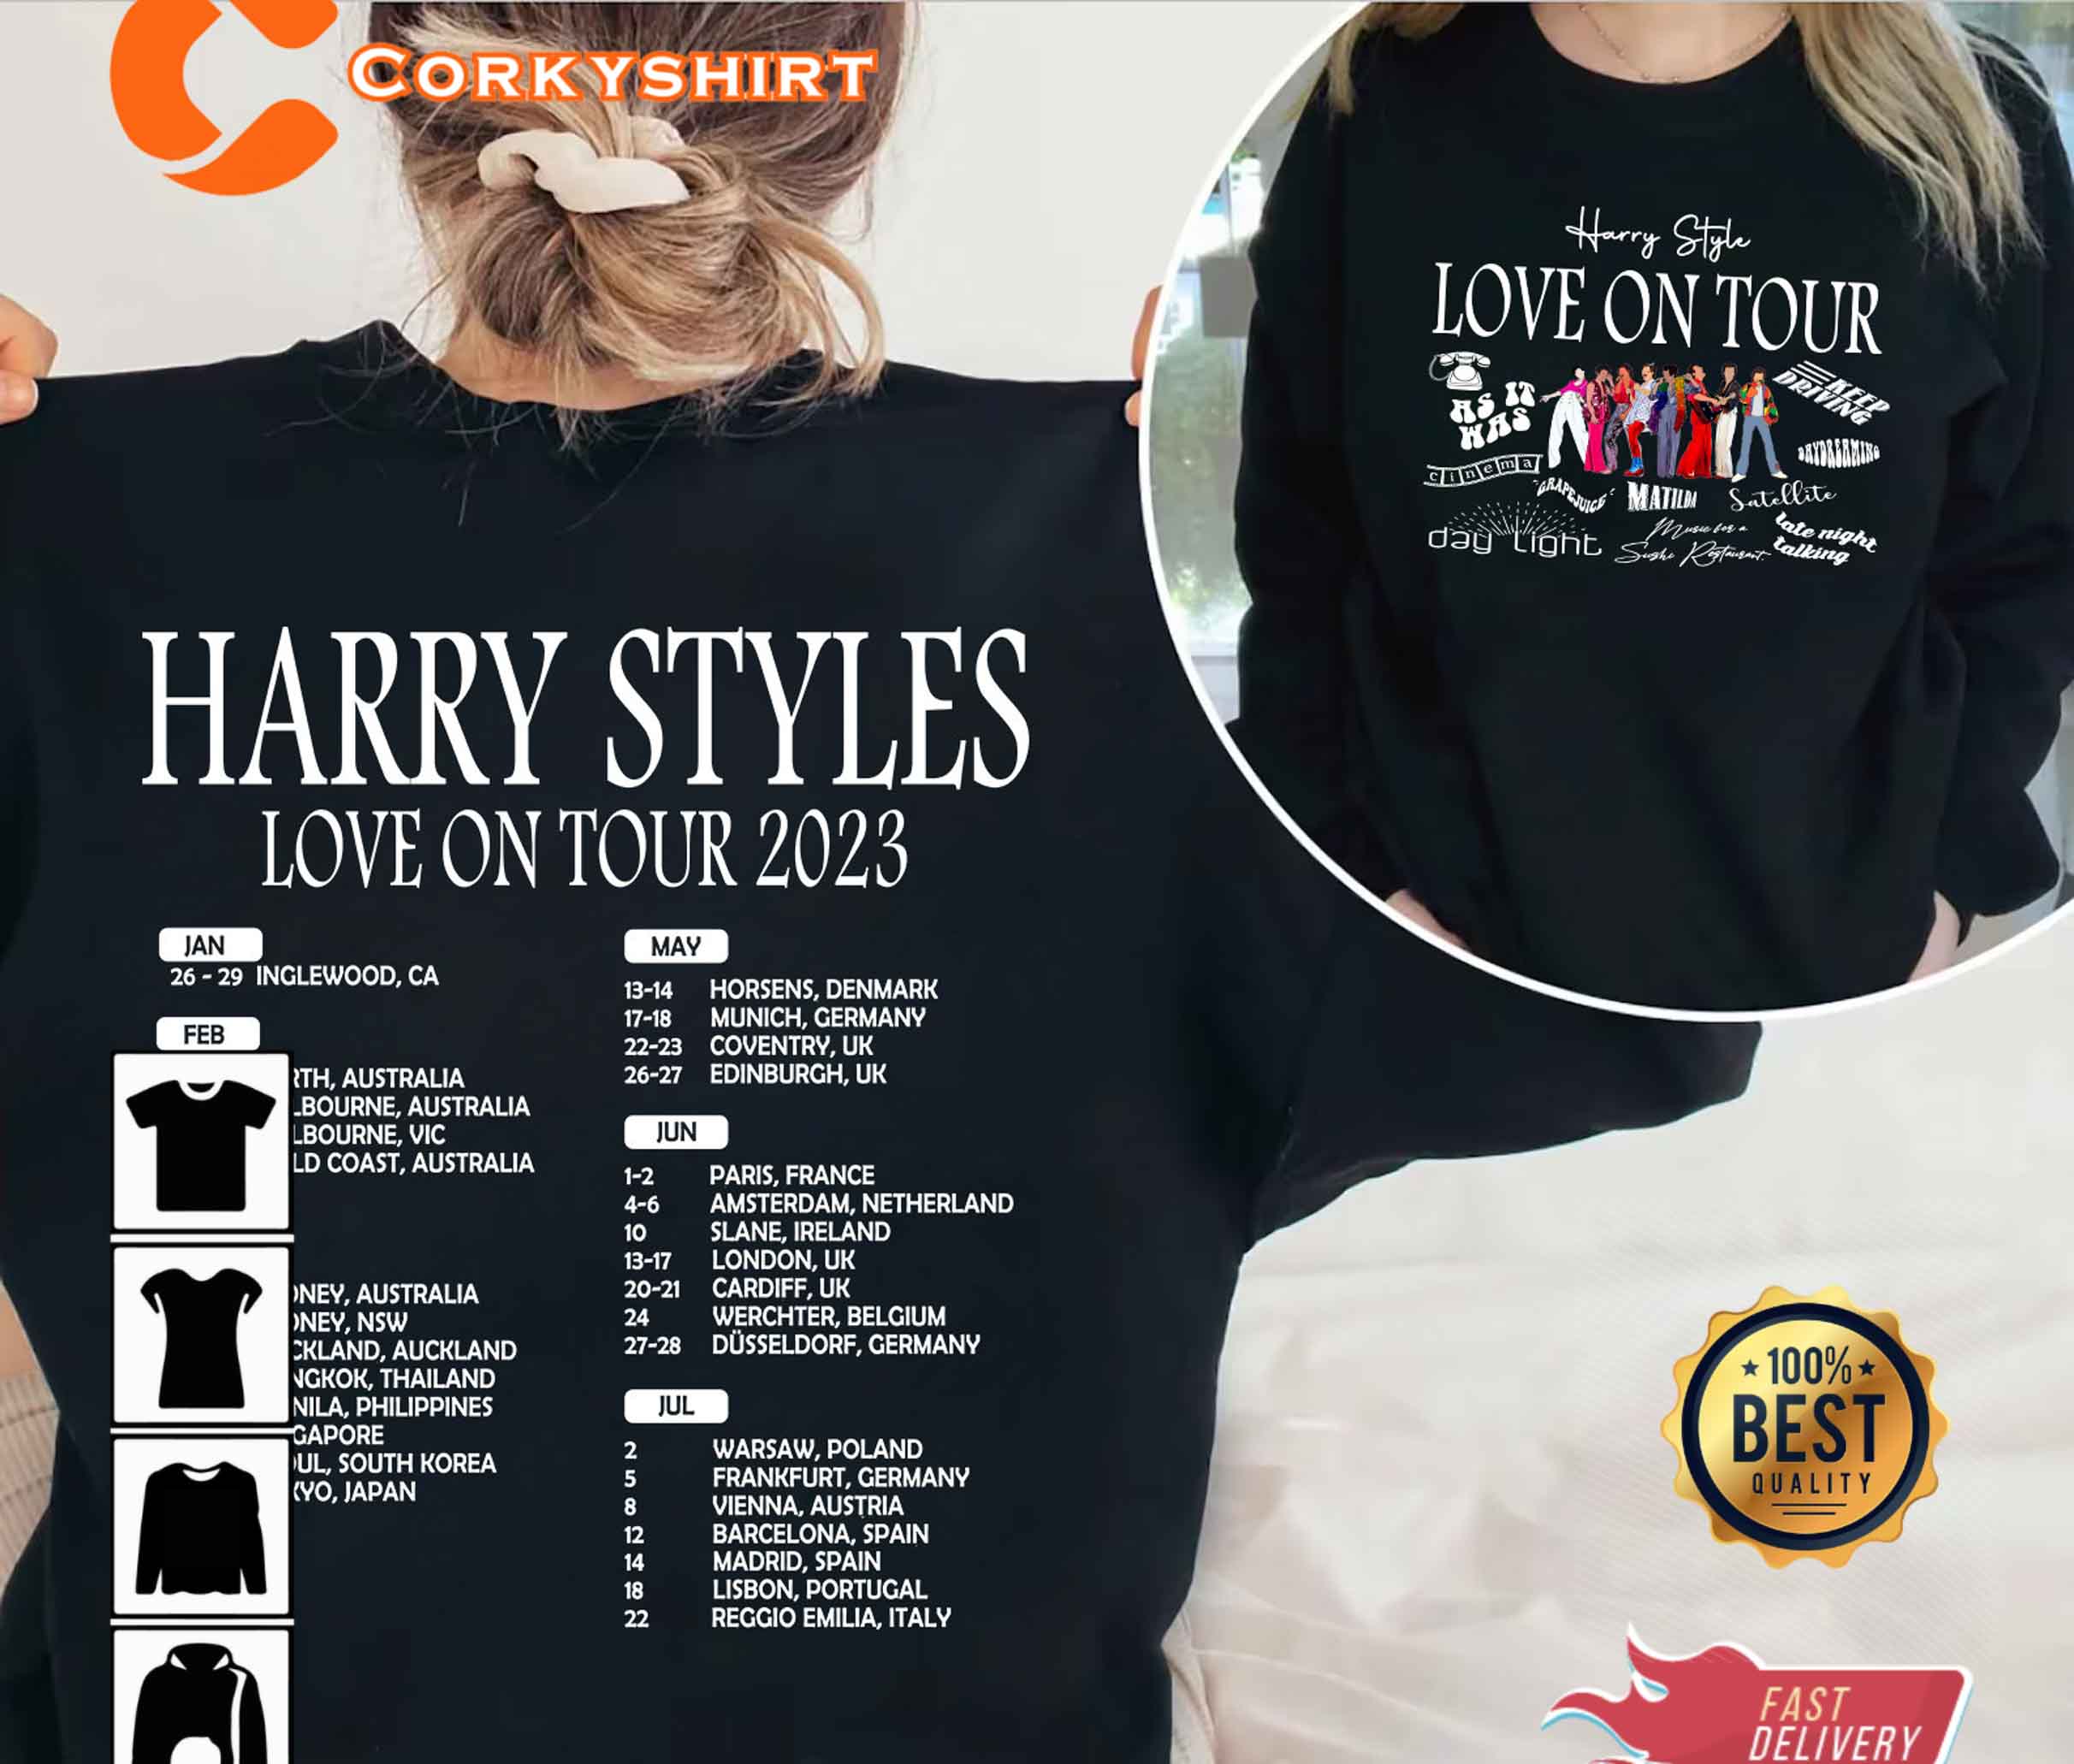 https://images.corkyshirt.com/wp-content/uploads/2023/01/Harry-Styles-Love-On-Tour-2023-Unisex-Printed-Shirt-4.jpg